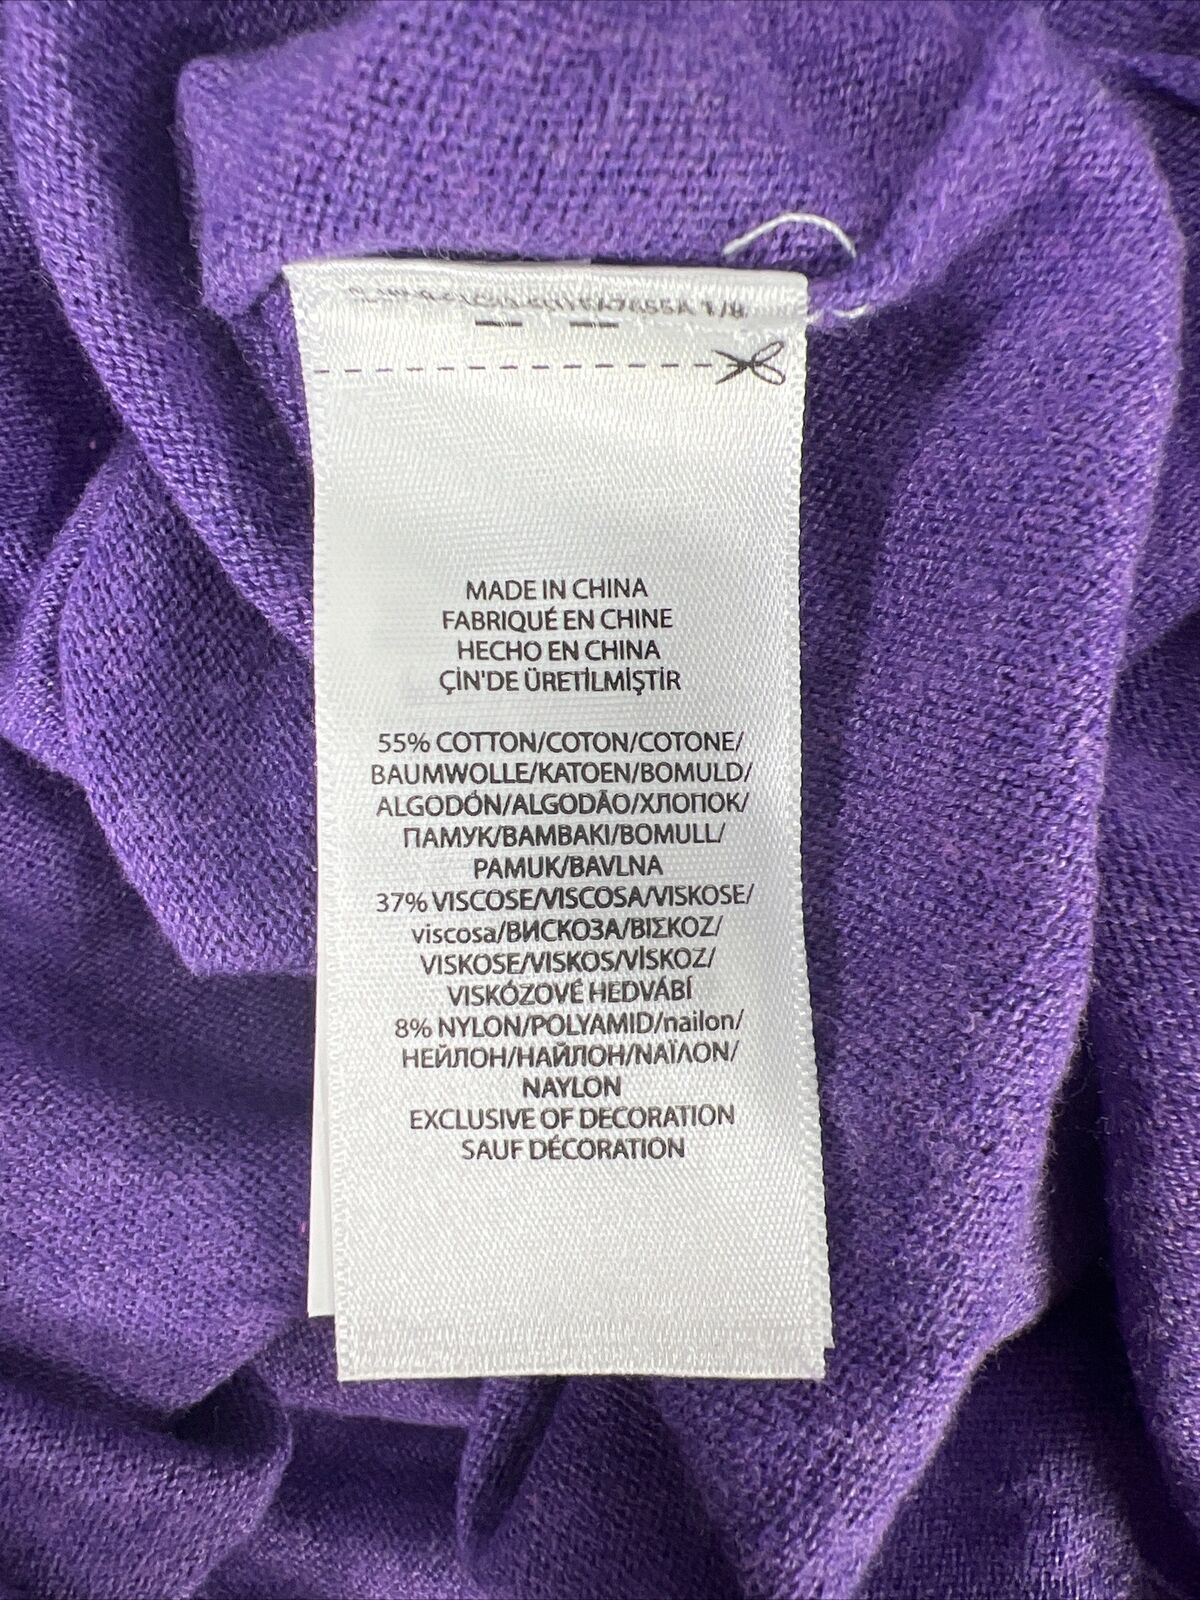 Polo Ralph Lauren Women's Purple Cotton Blend Curved Hem Sweater - S